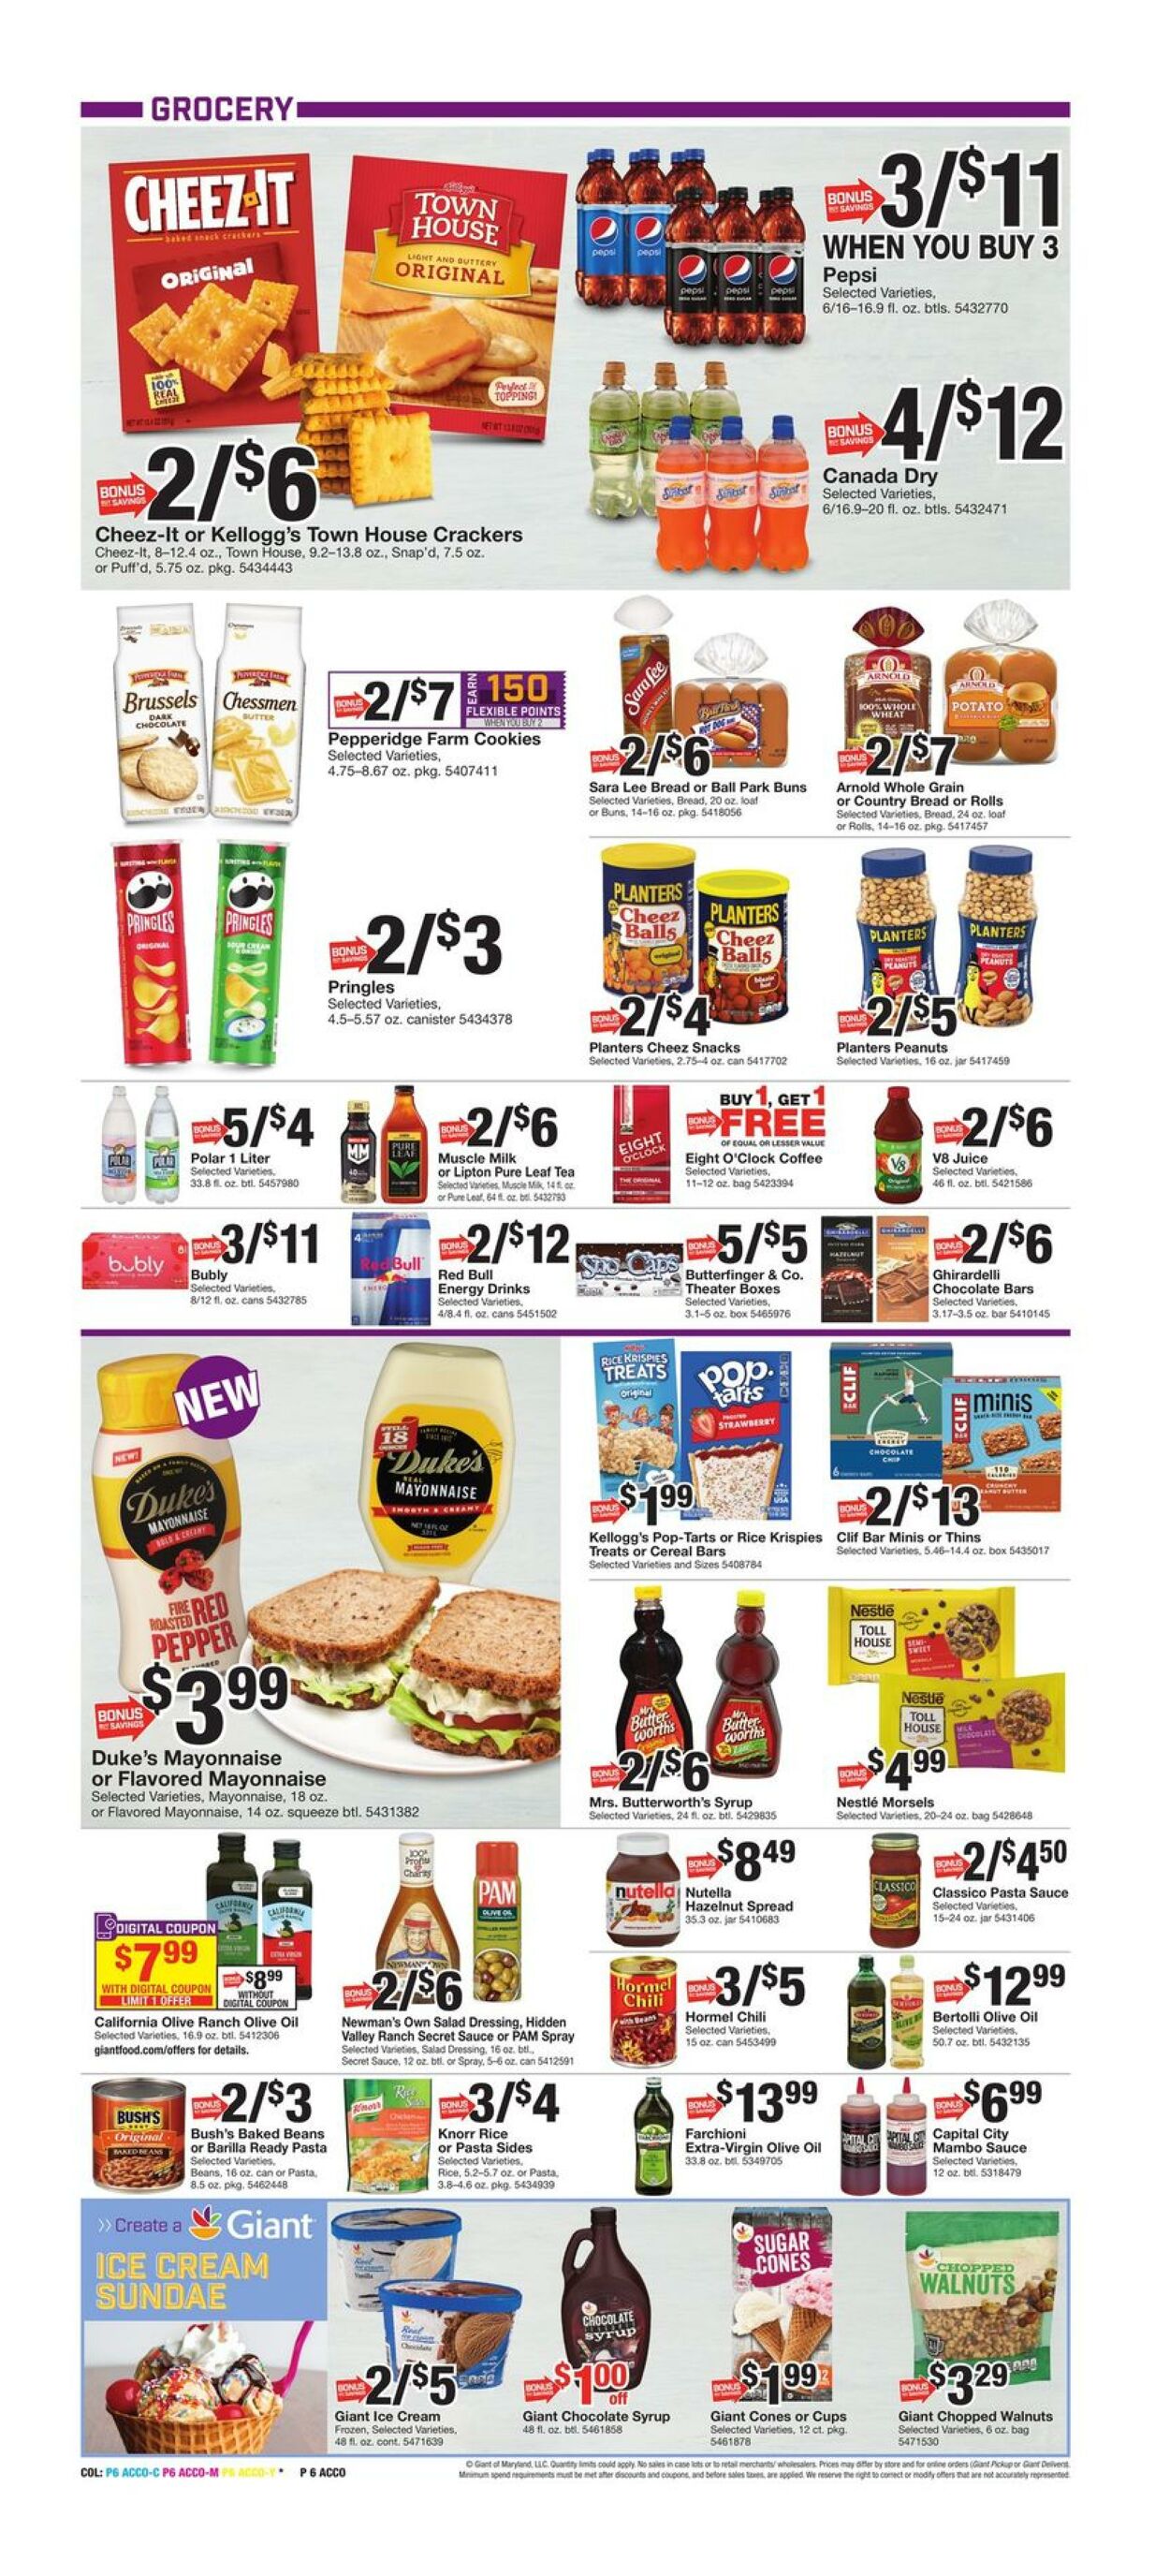 Weekly ad Giant Food 06/17/2022 - 06/23/2022